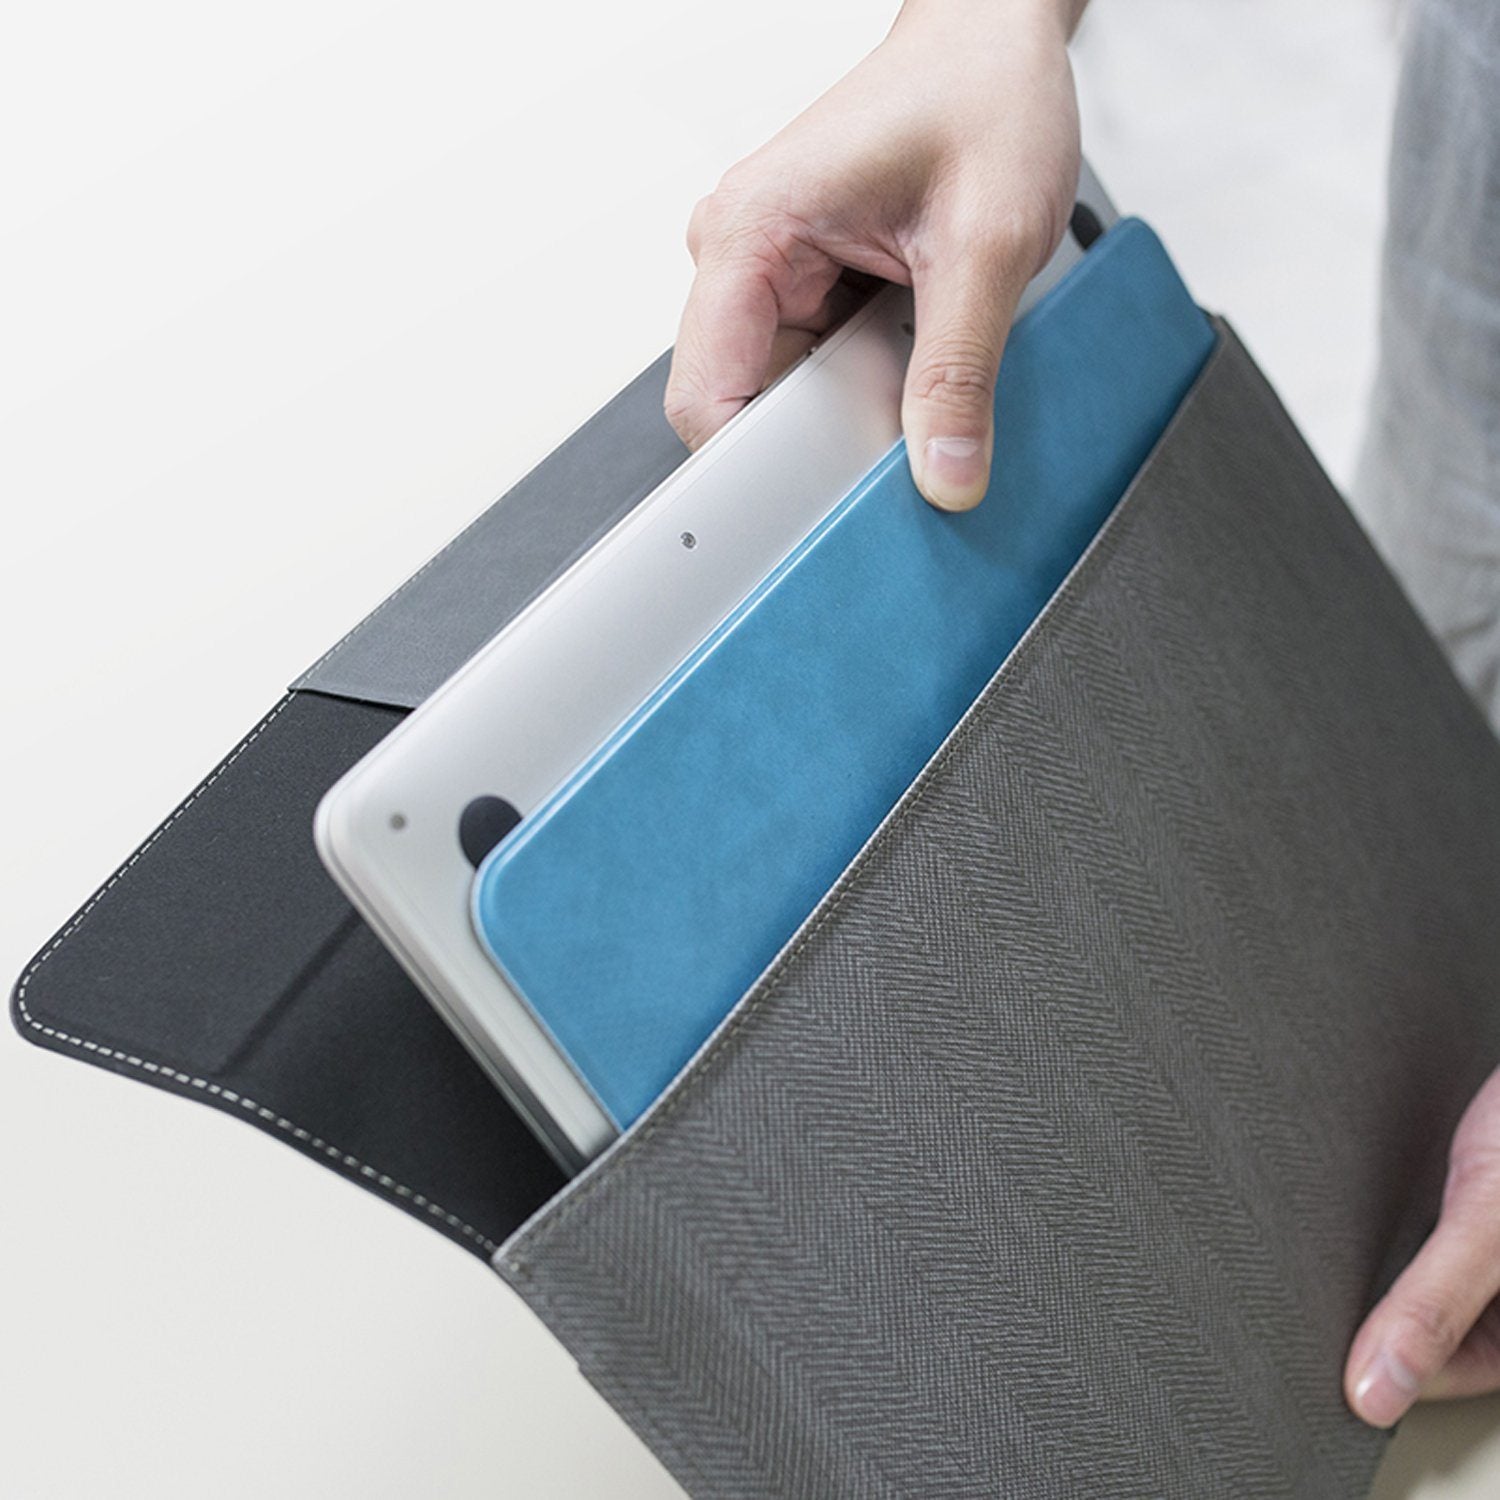 Ergomi Universal Ultra Lite PU Flat Laptop Stand Portable & Foldable Stand, Blue Default Ergomi 